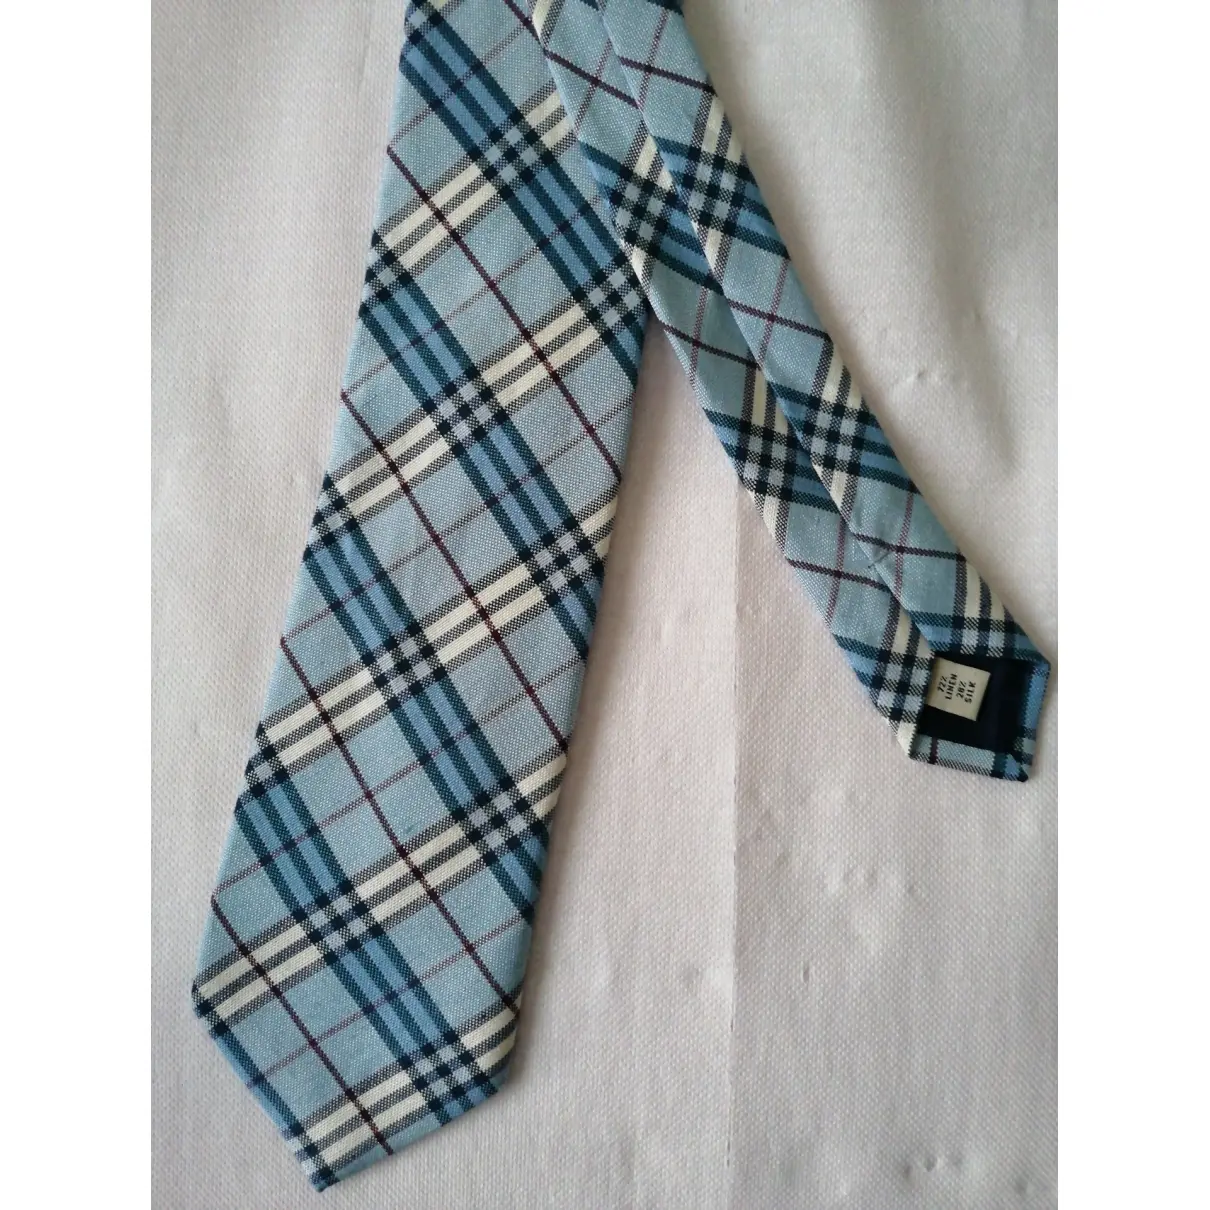 Burberry Silk tie for sale